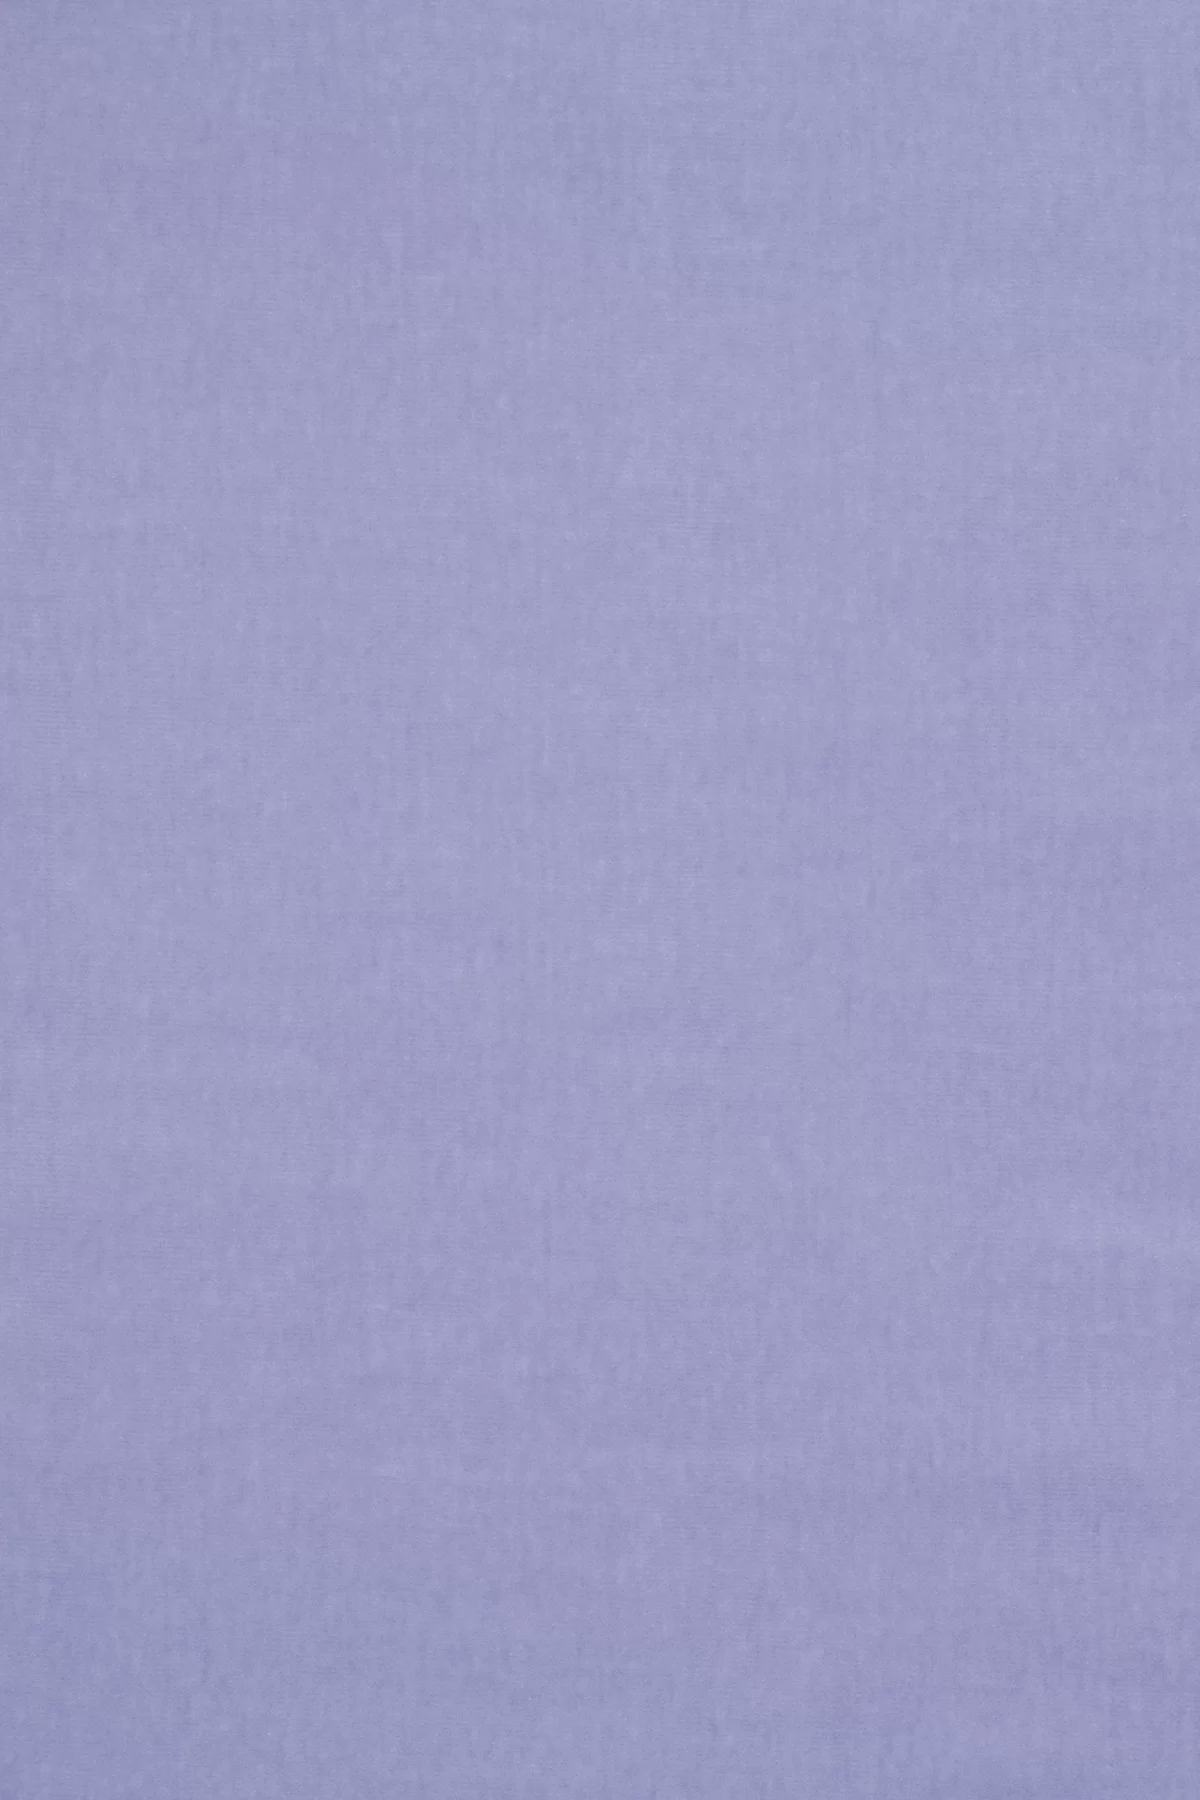 Fabric sample Harald 3 632 purple